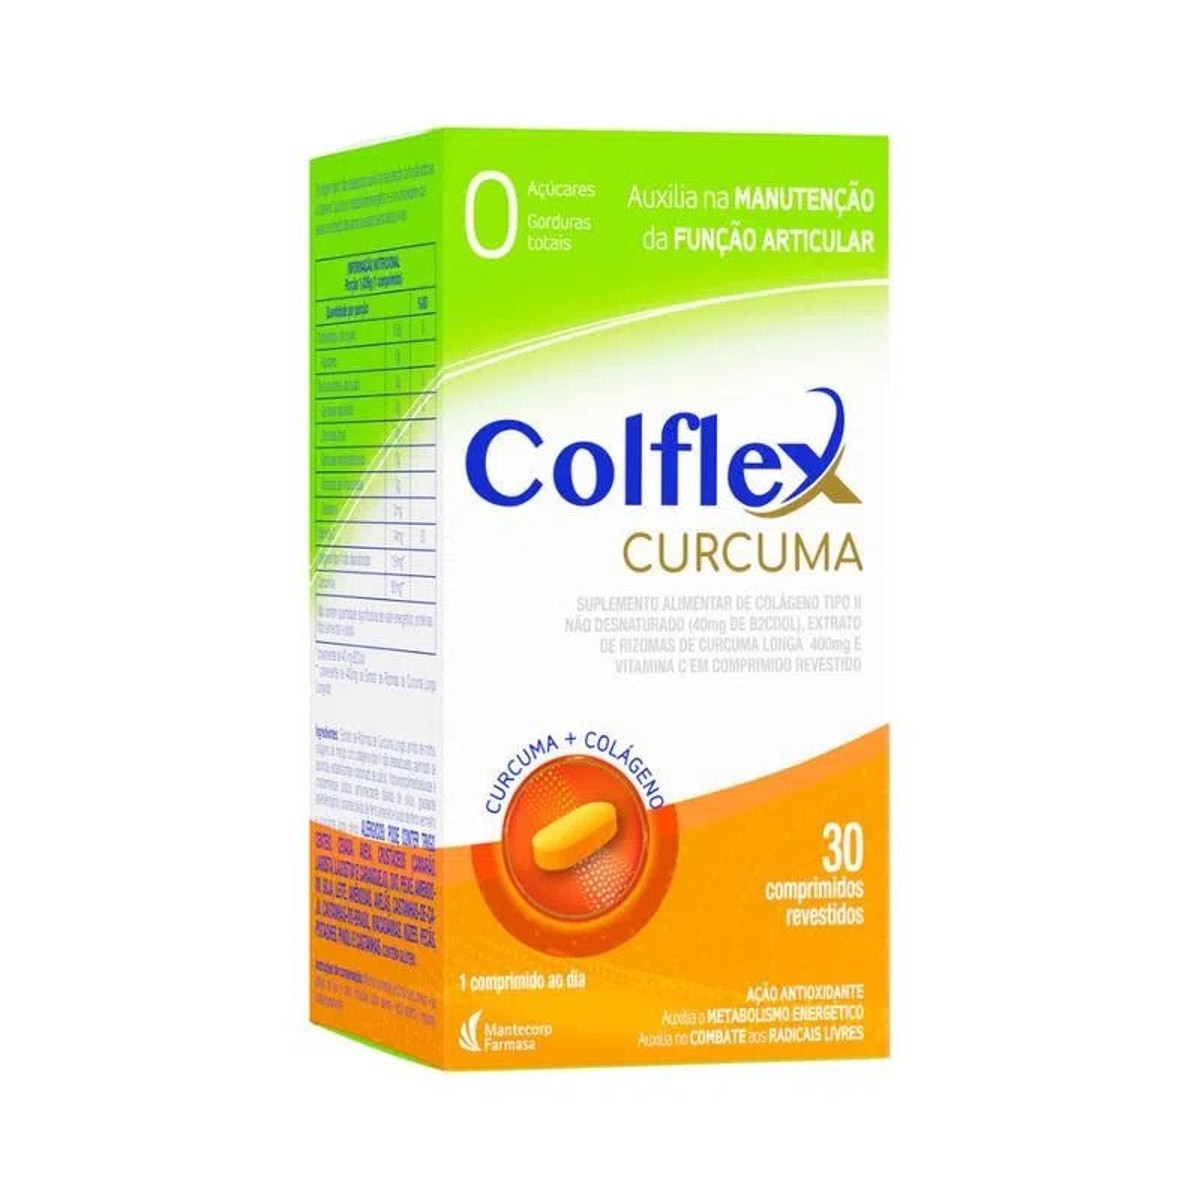 Colflex Curcuma 30 Comprimidos Revestidos